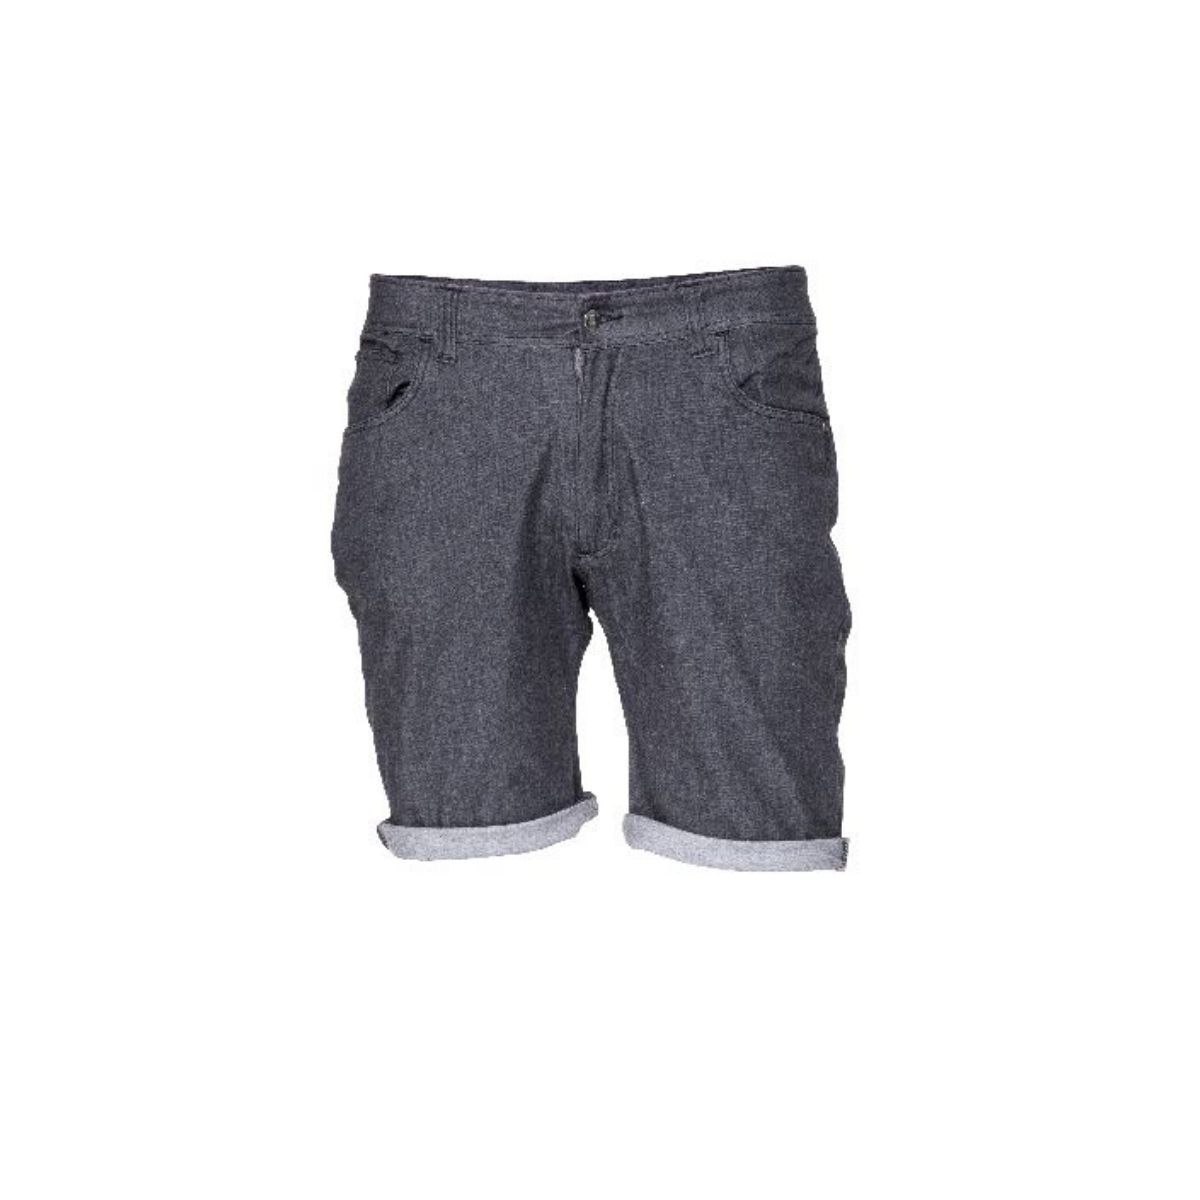 Snap Slim Jean - Climbing shorts - Men's